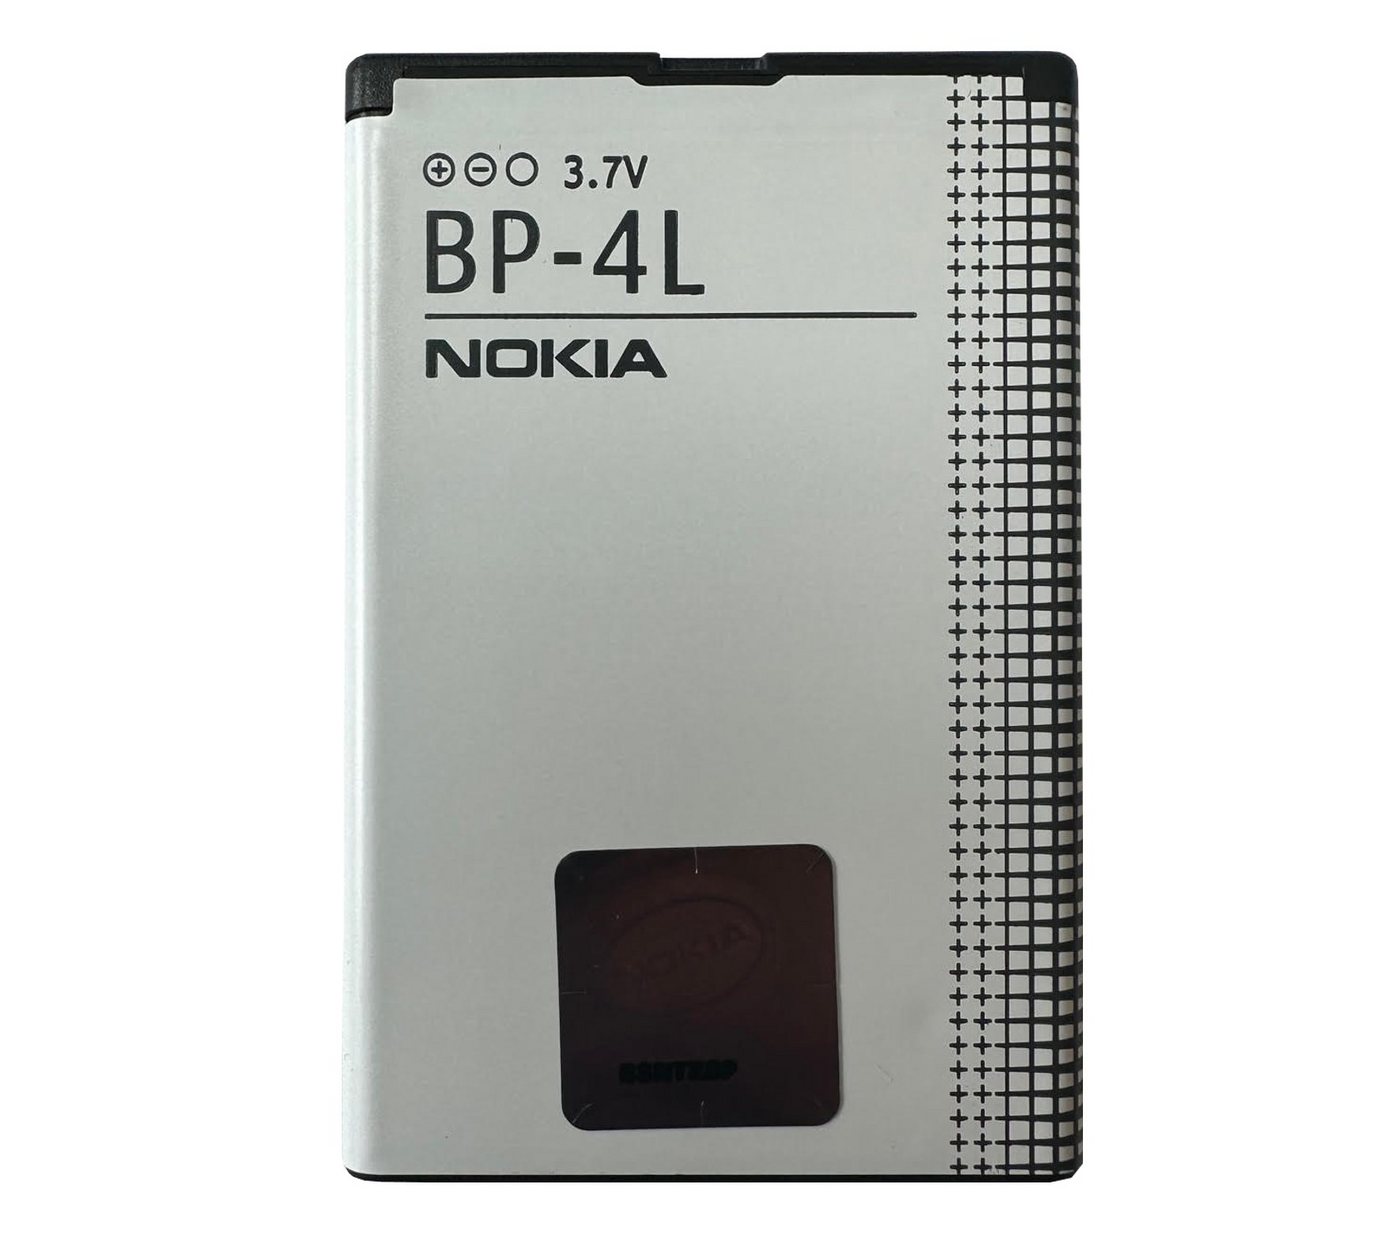 Nokia Original Nokia BP-4L Akku 1500 mAh Nokia E52 E55 E61i E71 N97 N810 Handy-Akku Nokia BP-4L 1500 mAh (3,7 V), Schnelles und effizientes Laden, Li-Ionen Zellen, Überladungsschutz von Nokia